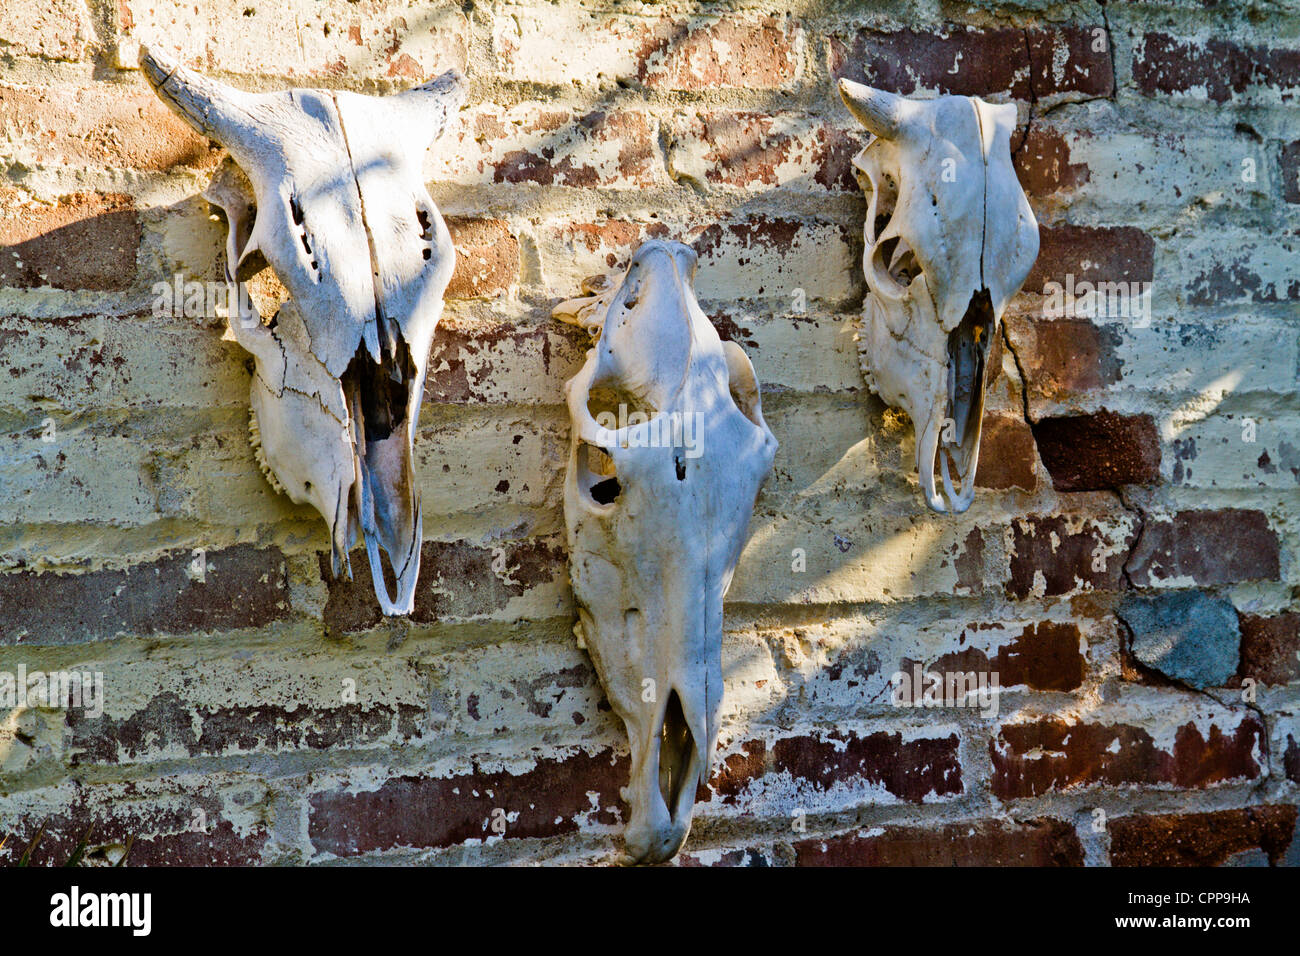 Steer skulls hanging on brick wall in 'Todos Santos' Baja Mexico Stock Photo